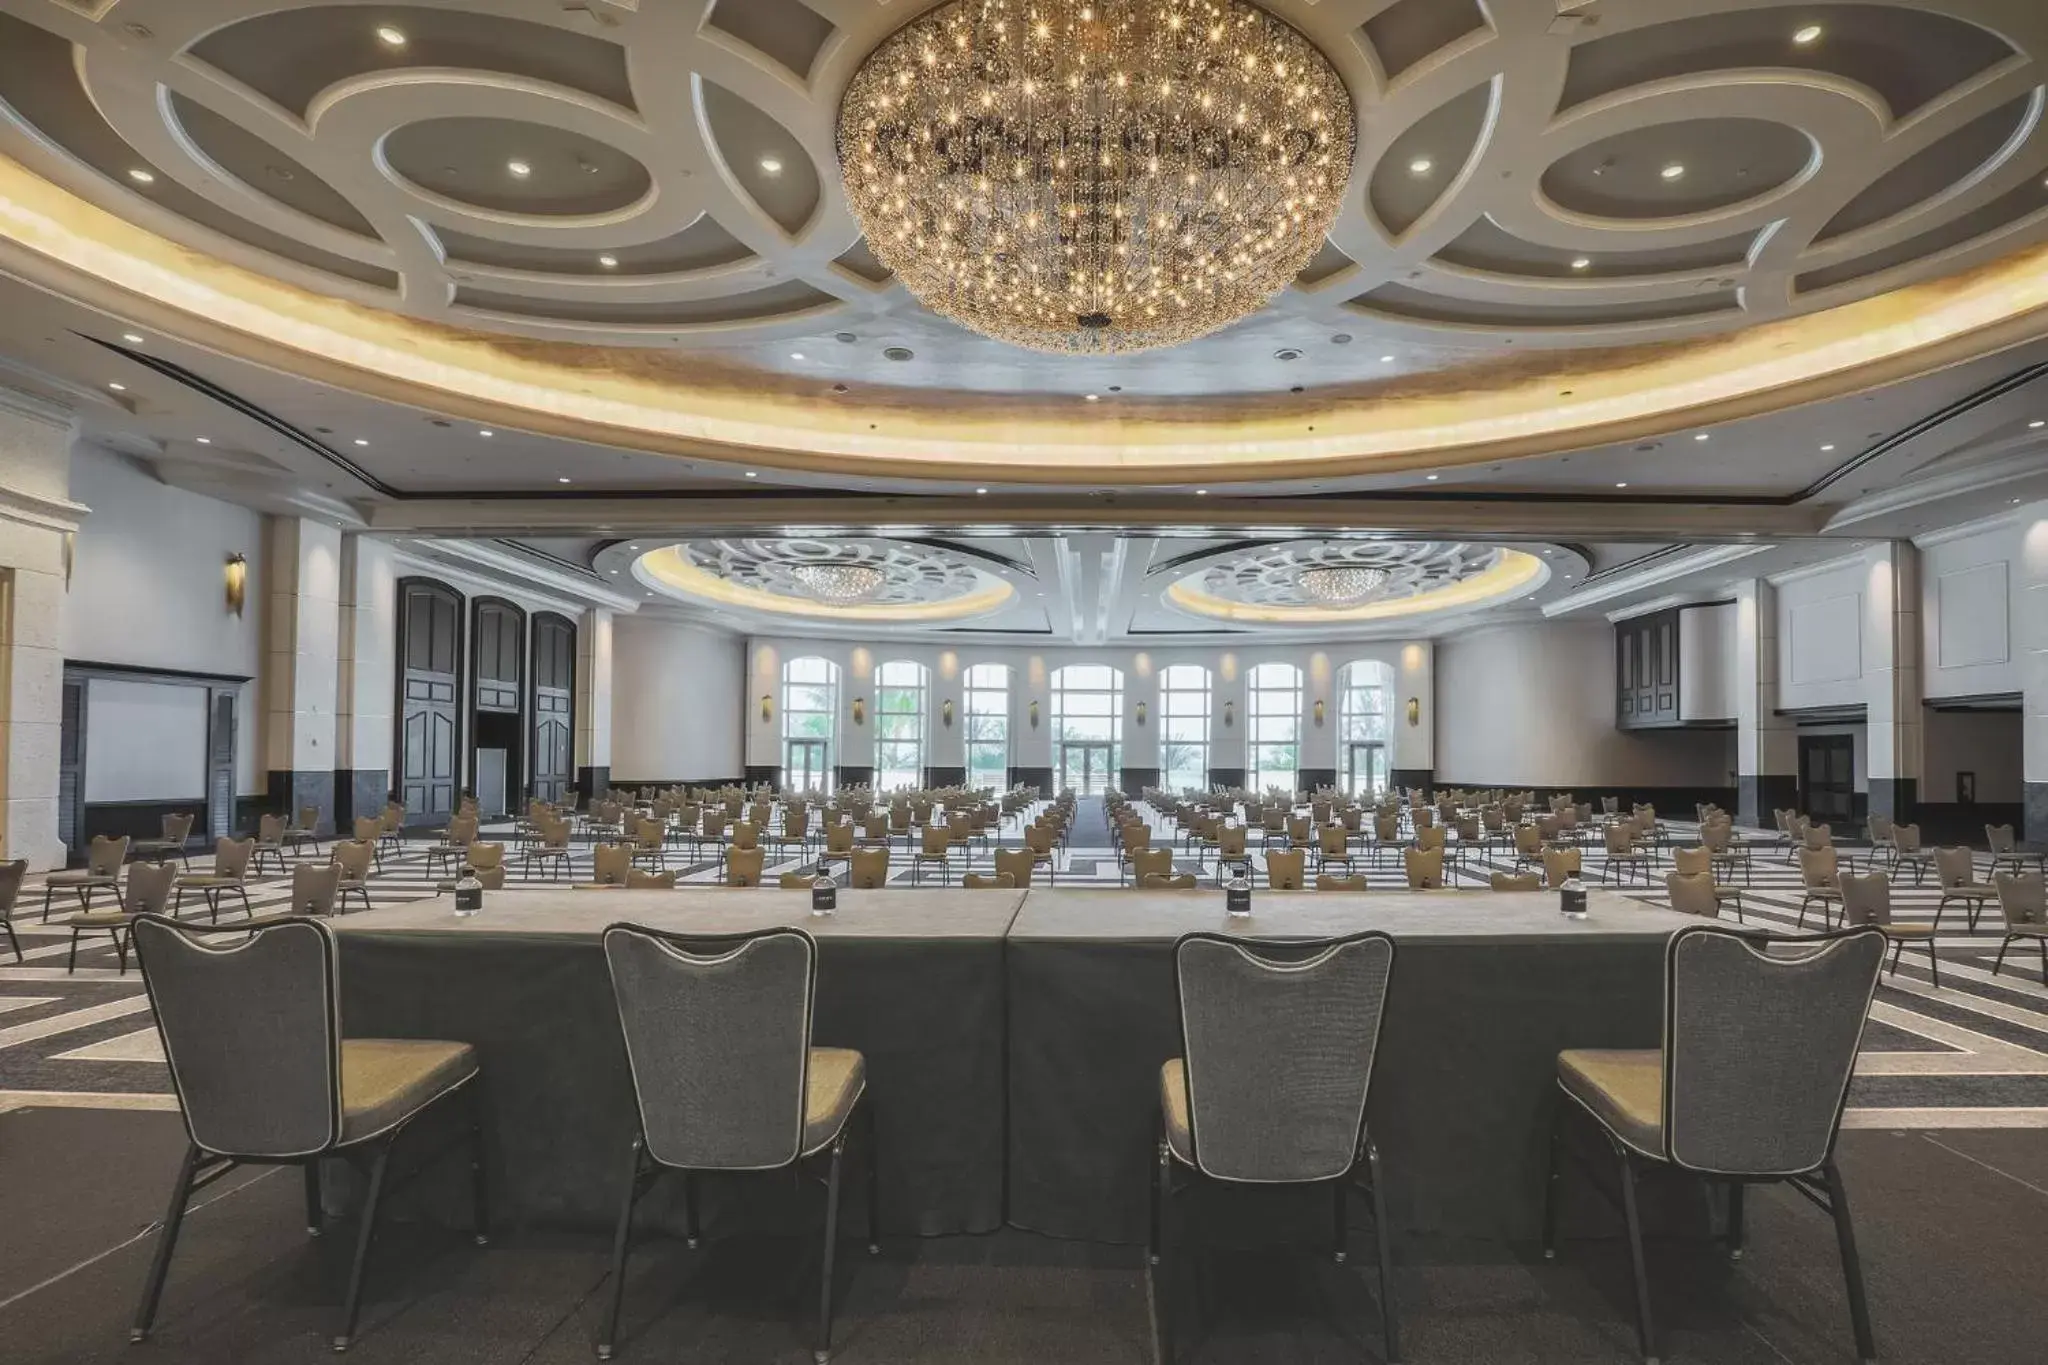 Banquet/Function facilities, Banquet Facilities in Loews Miami Beach Hotel